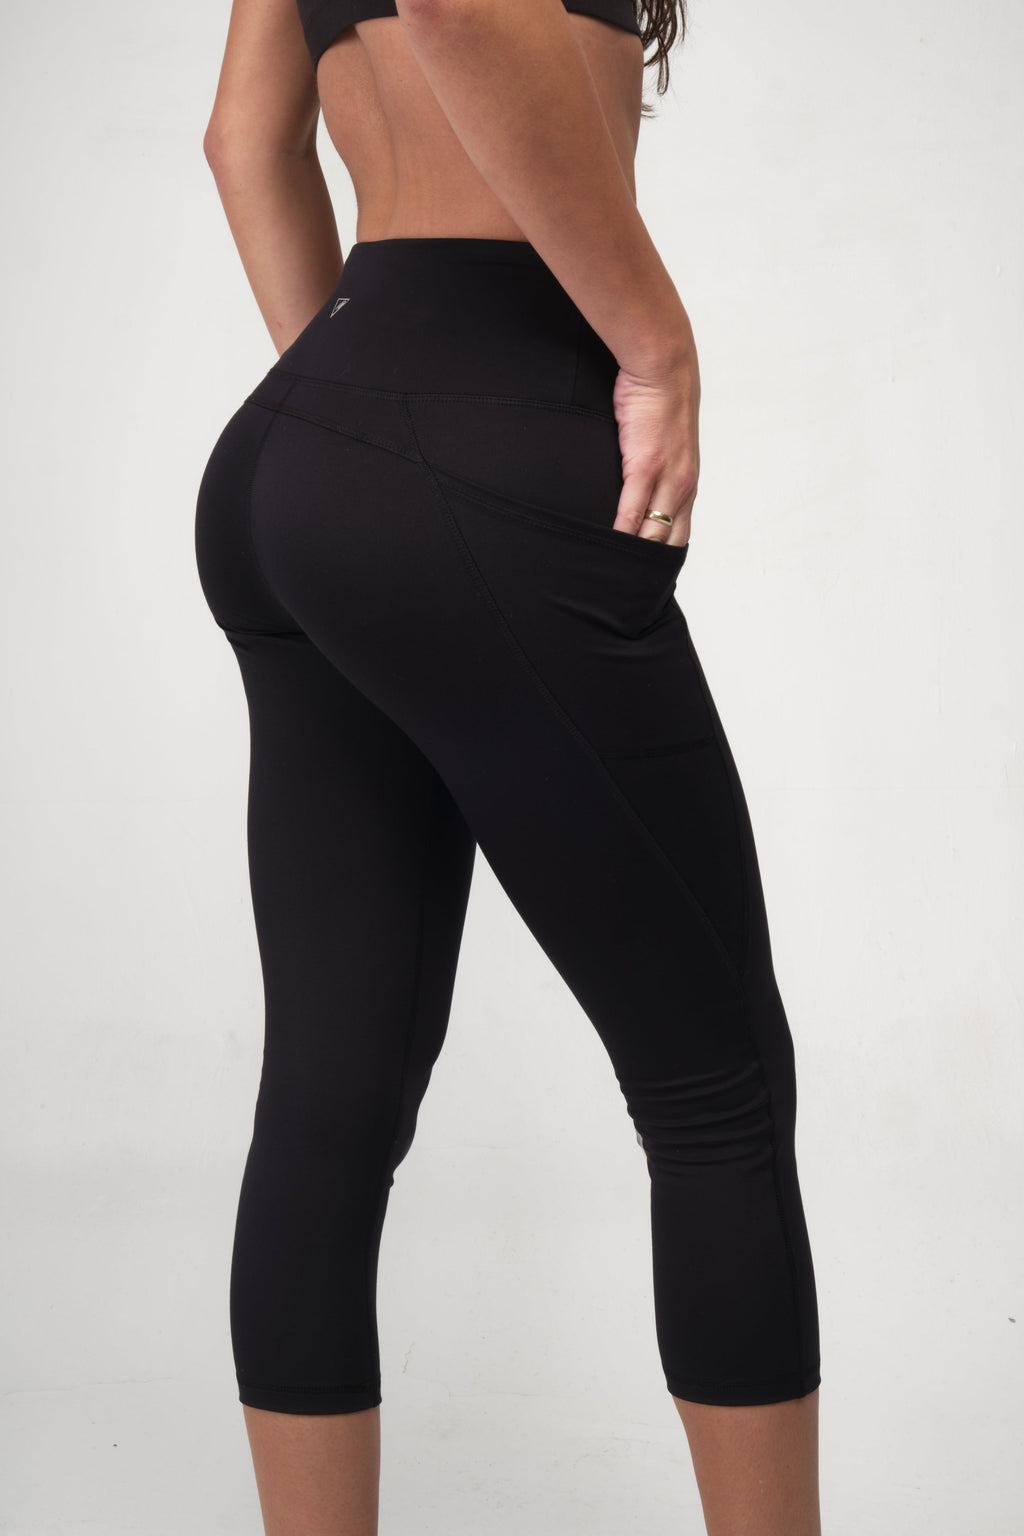 Lululemon STILL Black Yoga Pants Size 4 XS Leggings 30.5 Inseam